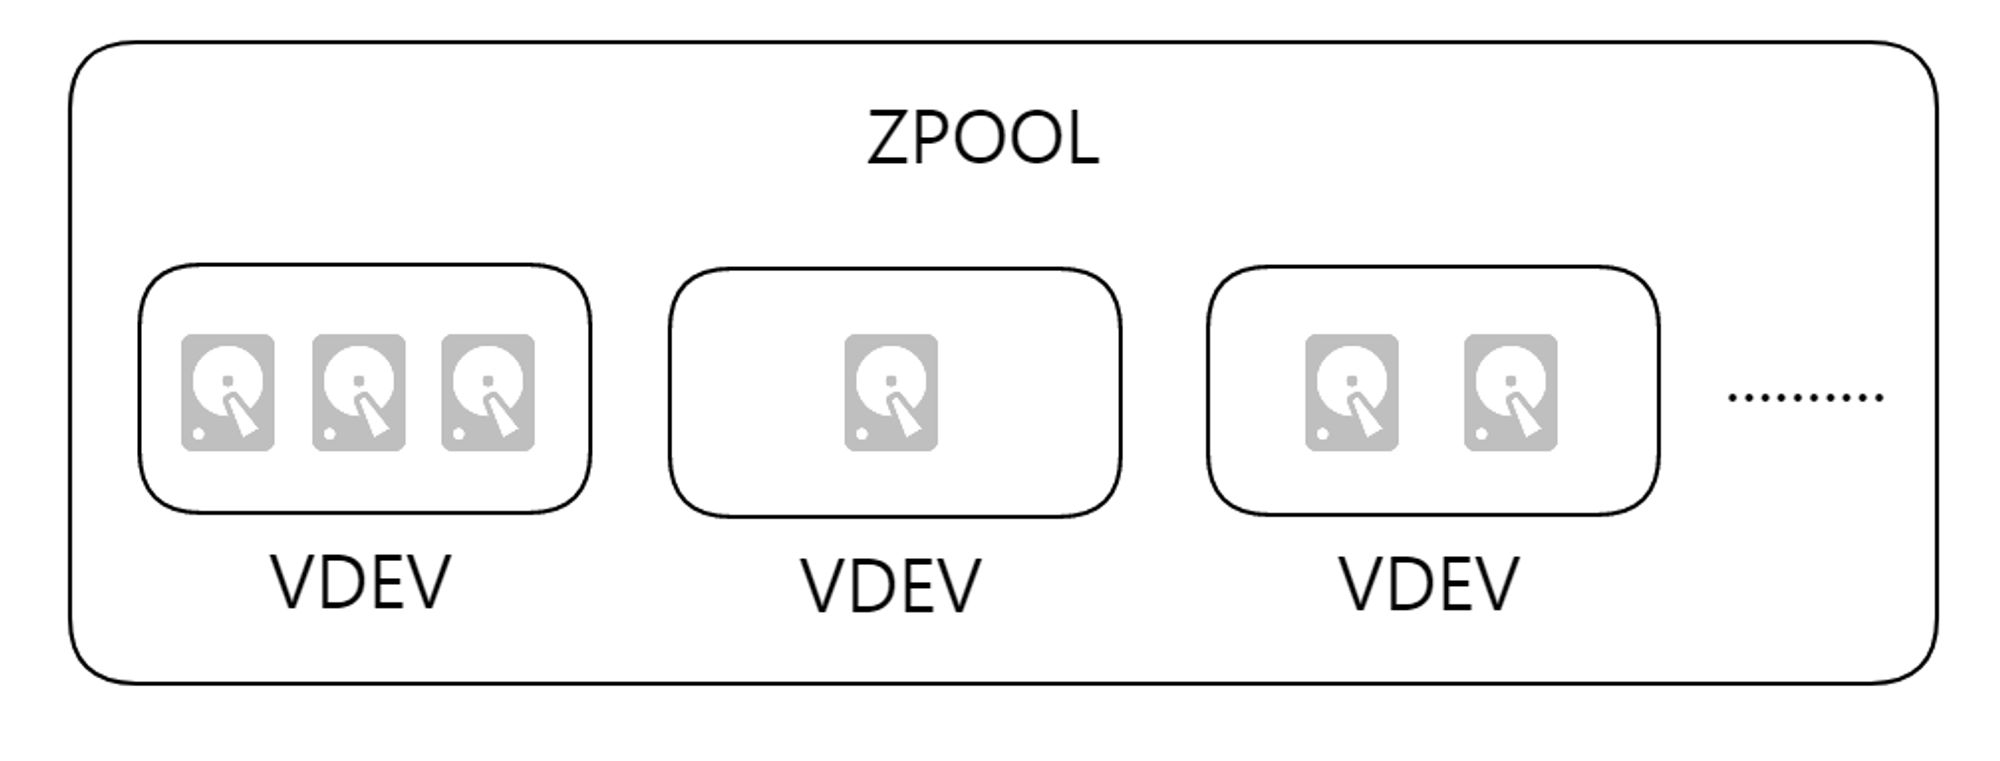 ZPOOL 与 VDEV 的关系